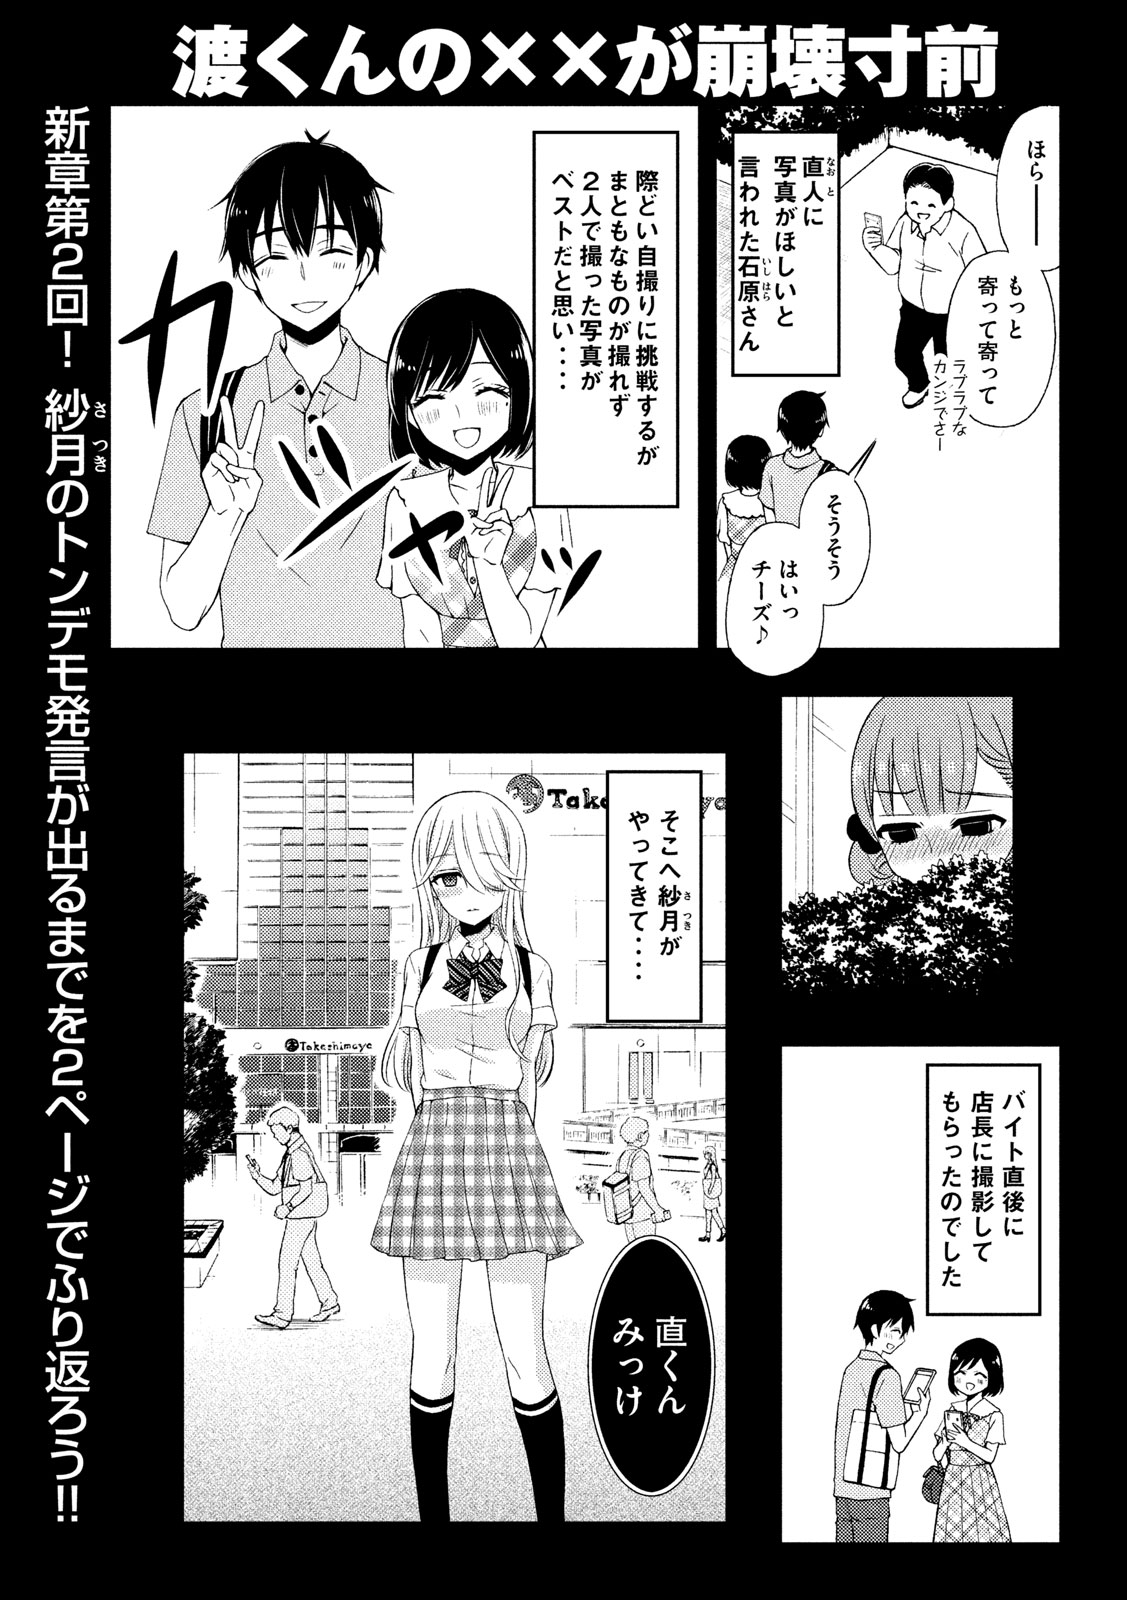 Watari-kun no xx ga Houkai Sunzen - Chapter 49 - Page 1